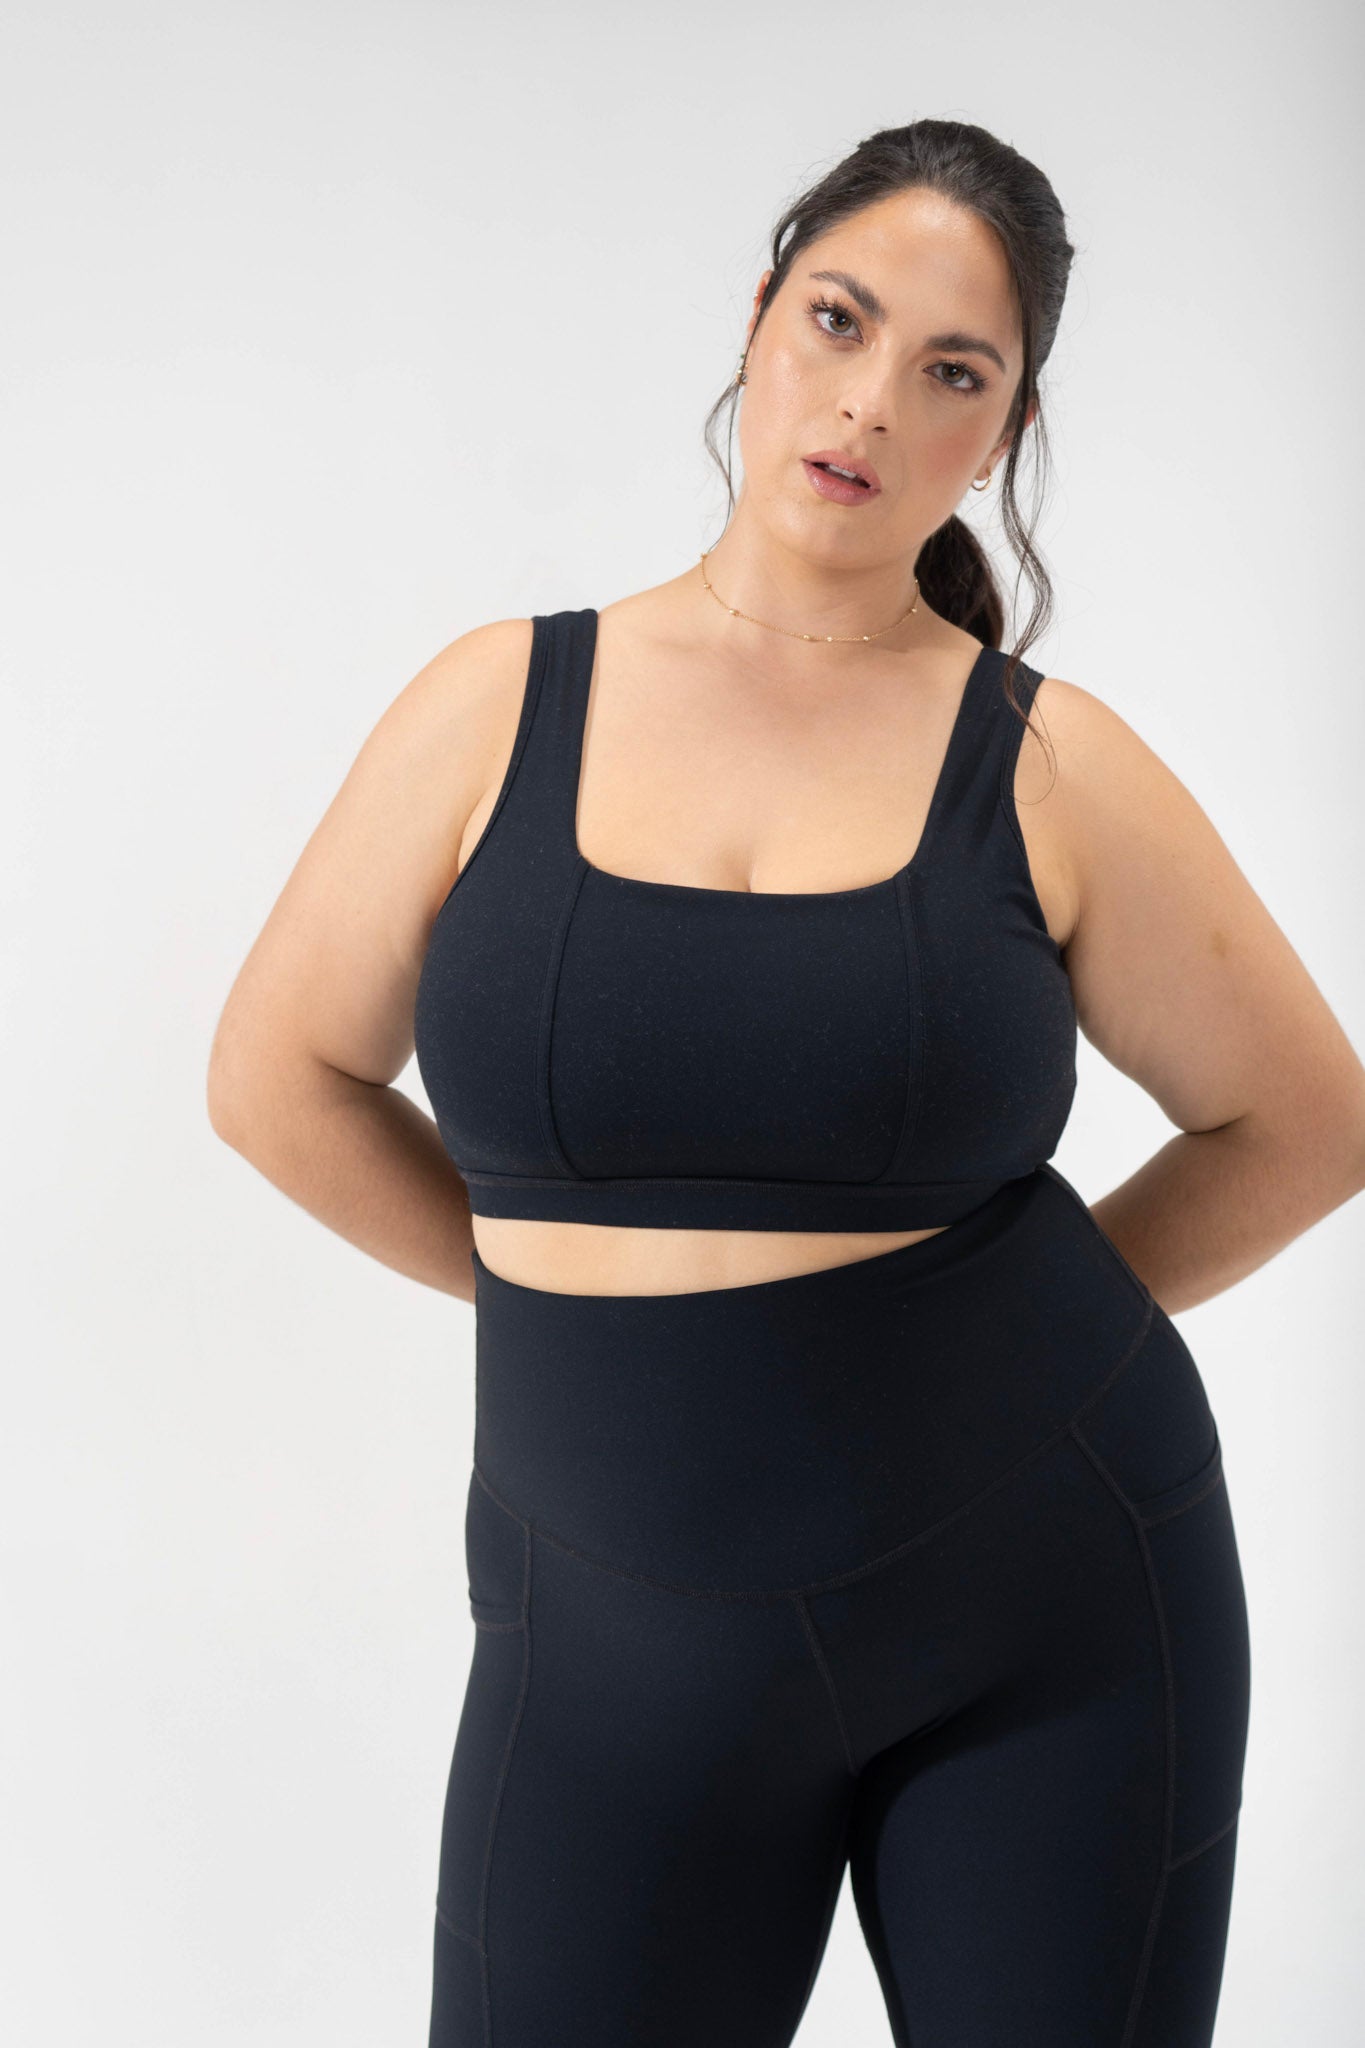 model wears plus size criss cross sports bra, cute activewear in black POPFLEX corset bra from the basics collection